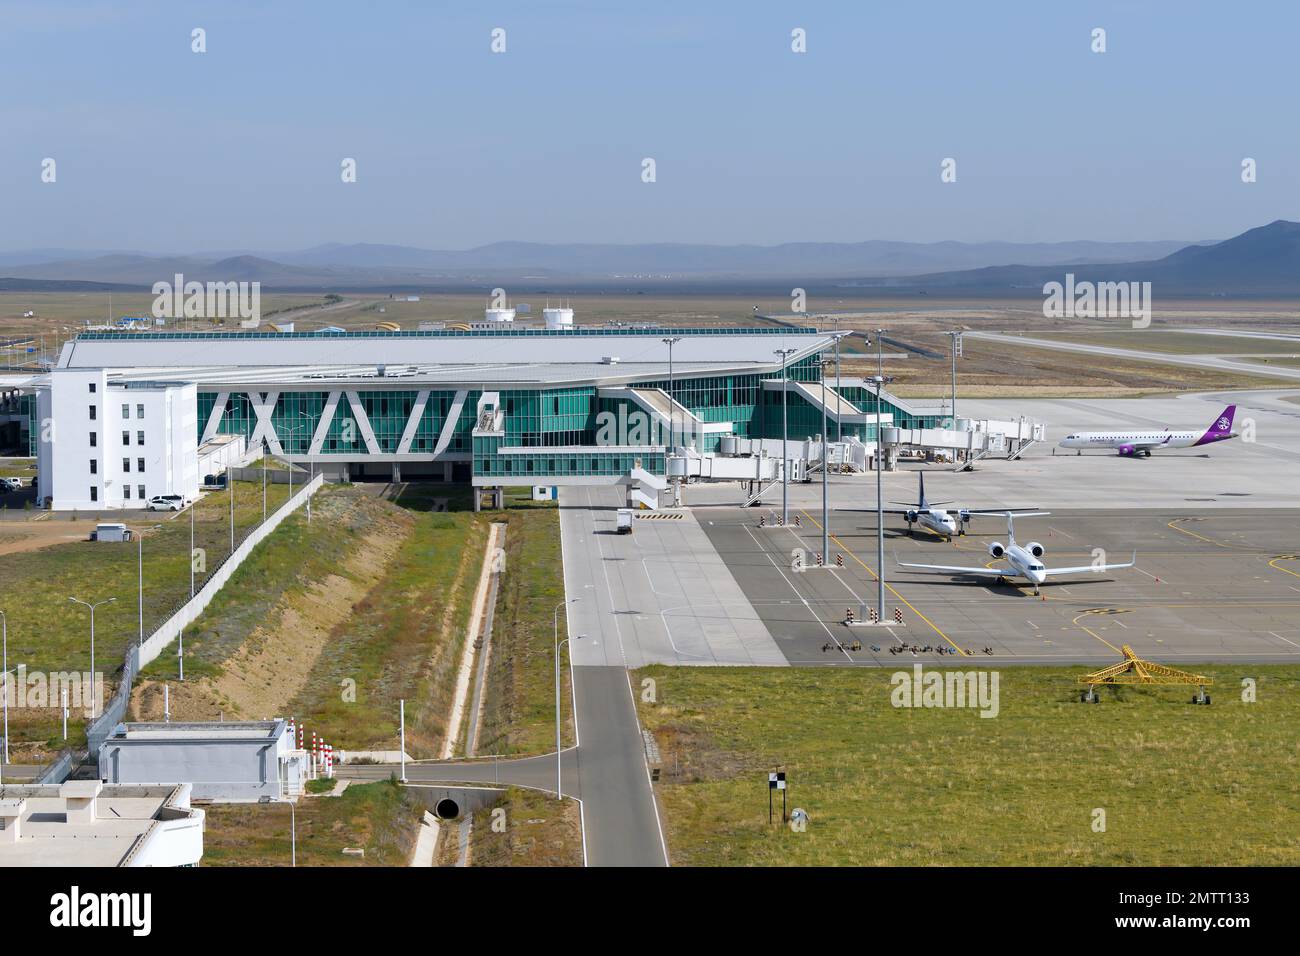 New Ulaanbaatar International Airport passengers terminal. New airport. Ulaanbaatar Airport in Mongolia named Chinggis Khaan International Airport. Stock Photo